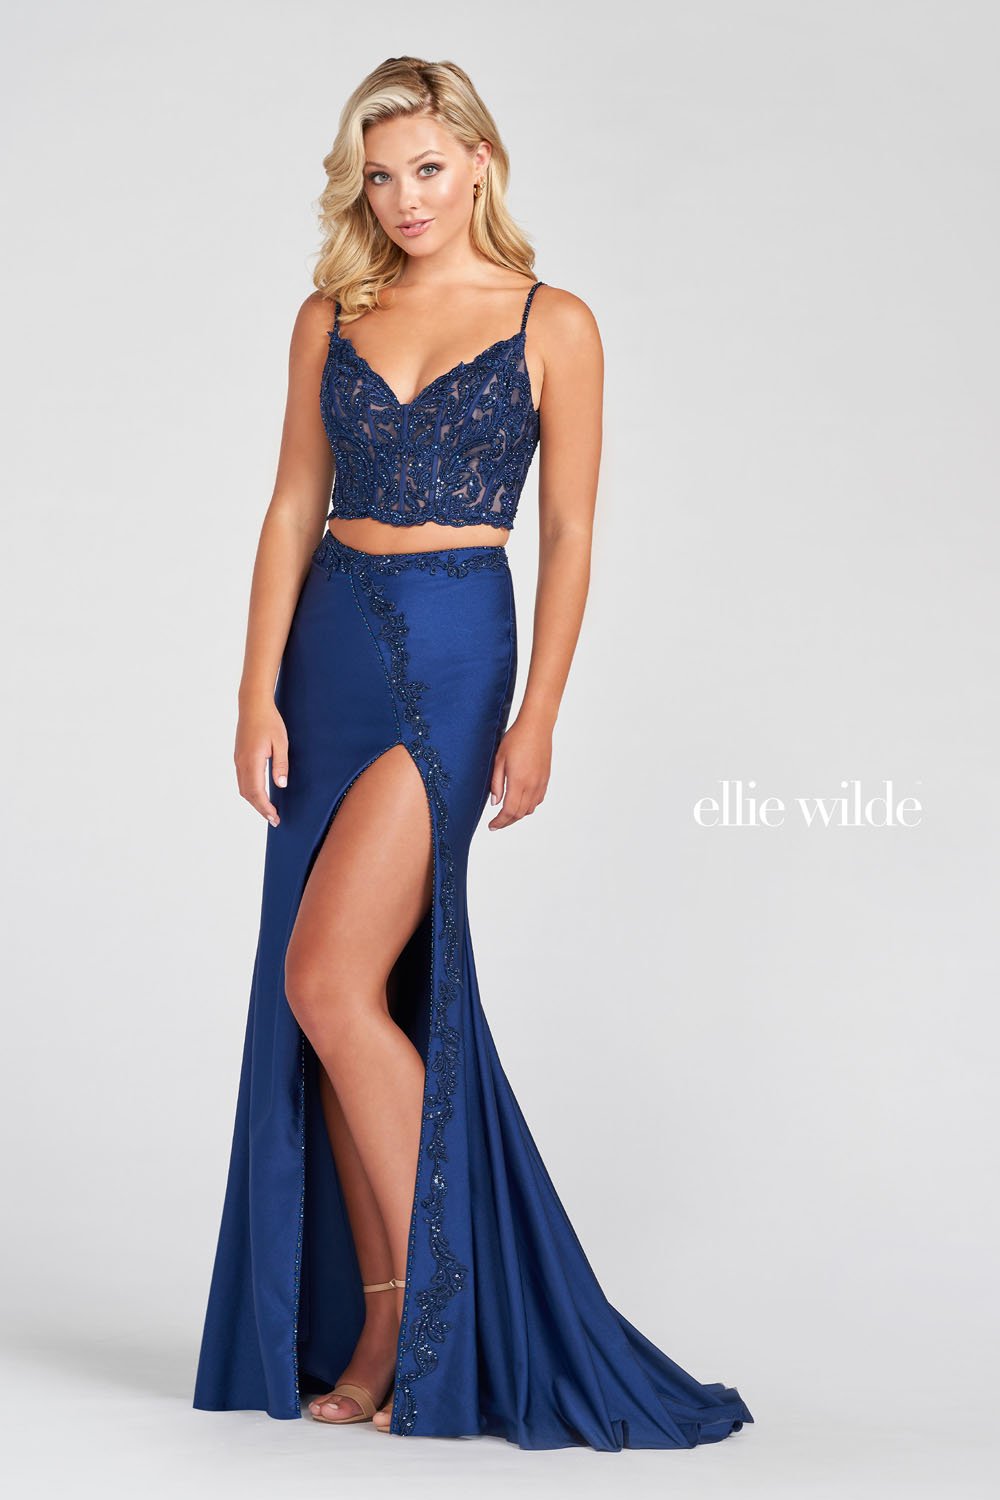 Ellie Wilde Navy Blue EW122043 Prom Dress Image.  Navy Blue formal dress.